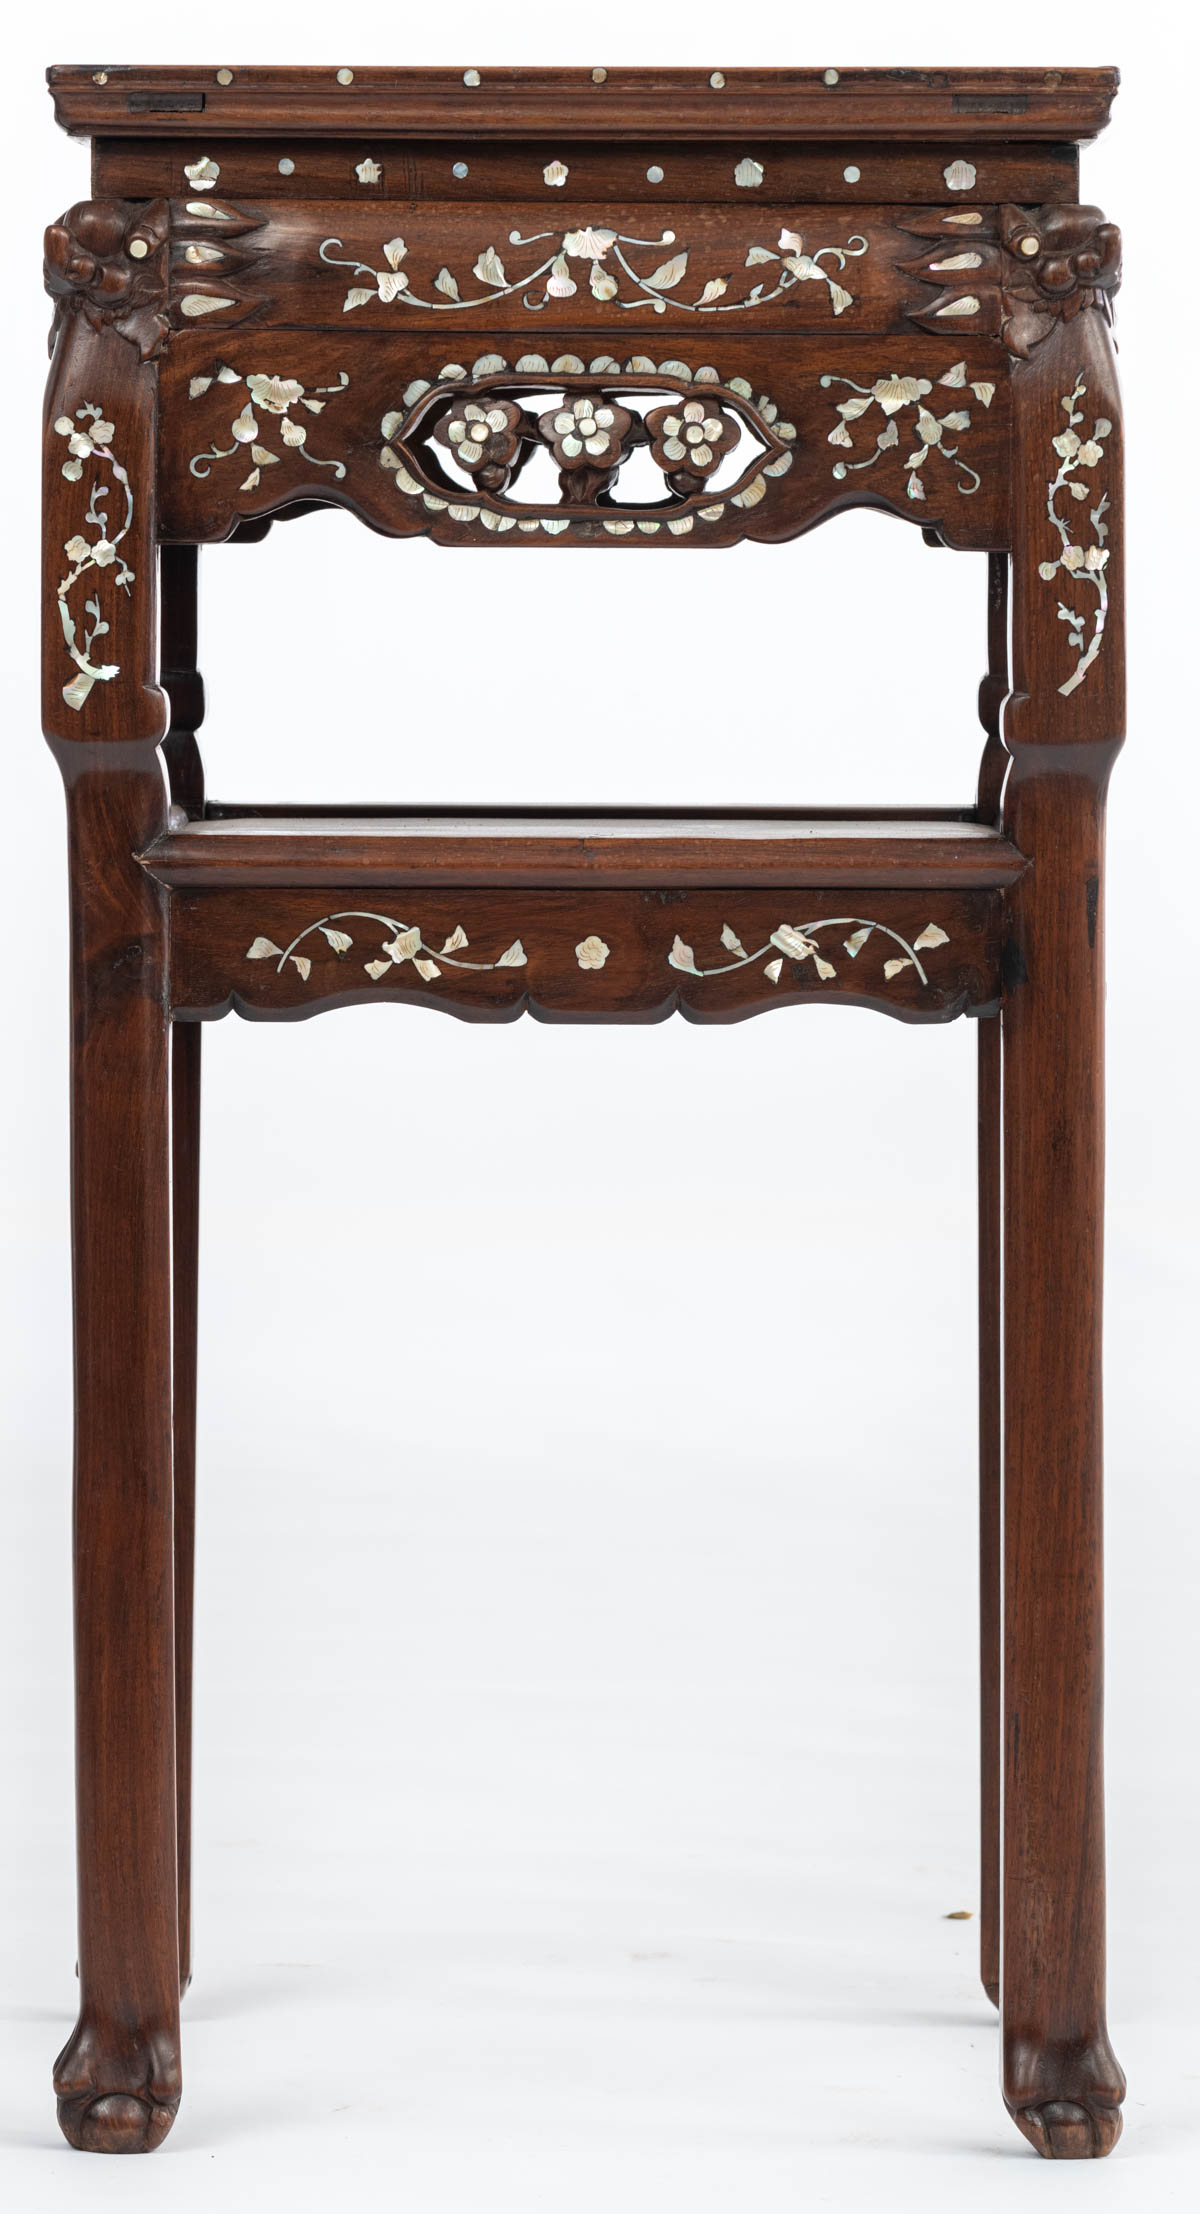 A Chinese exotic hardwood furniture set - Image 11 of 16